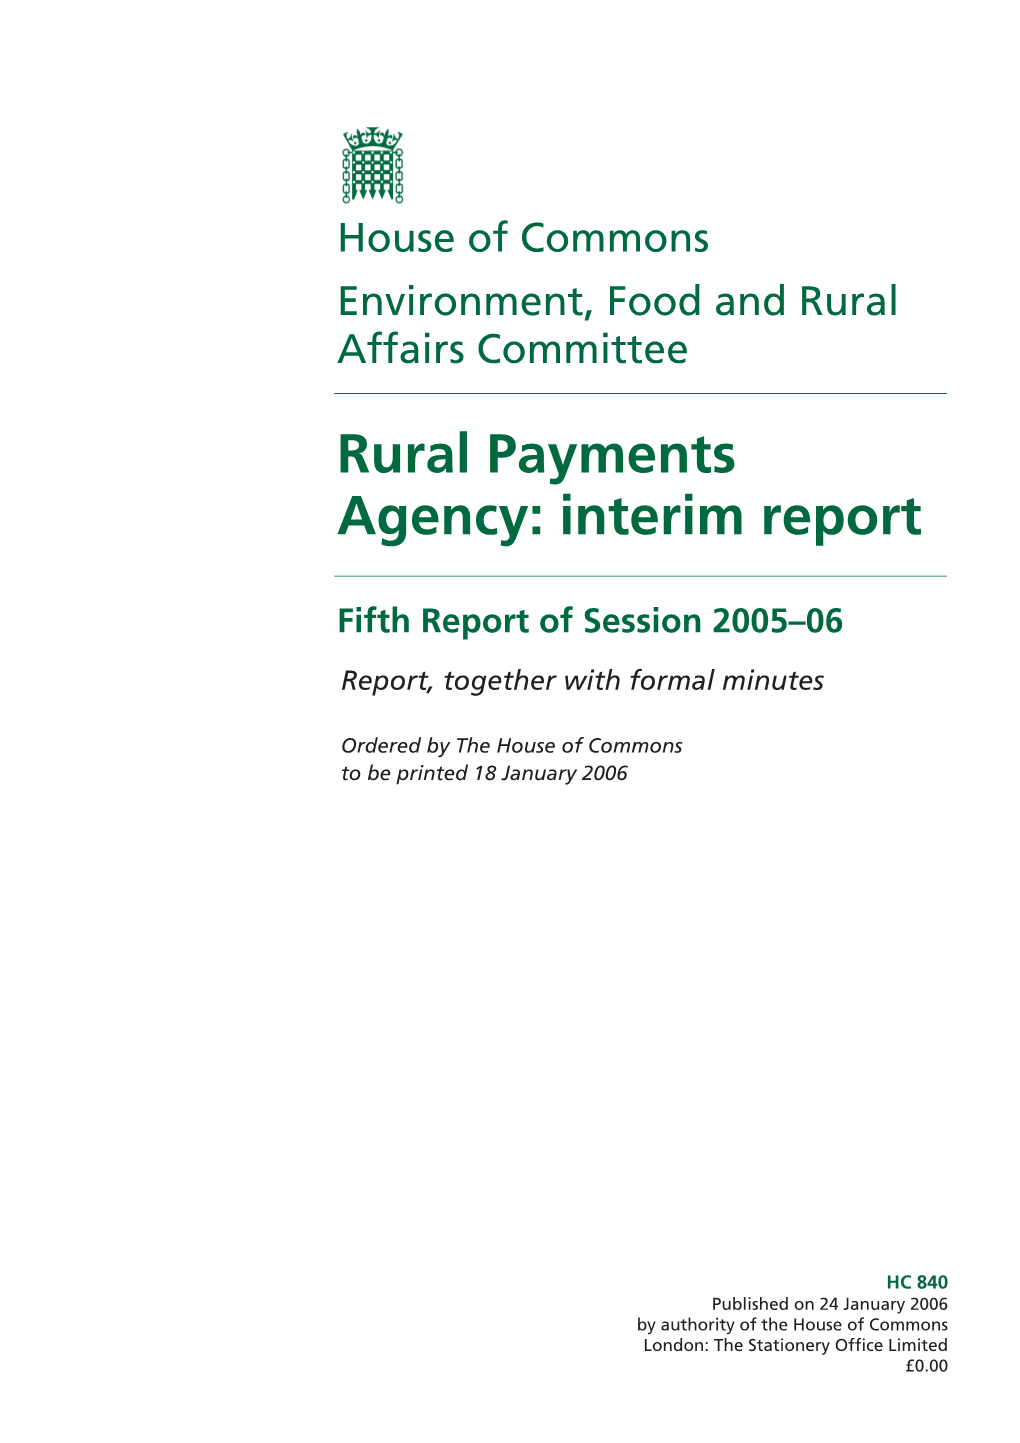 Rural Payments Agency: Interim Report